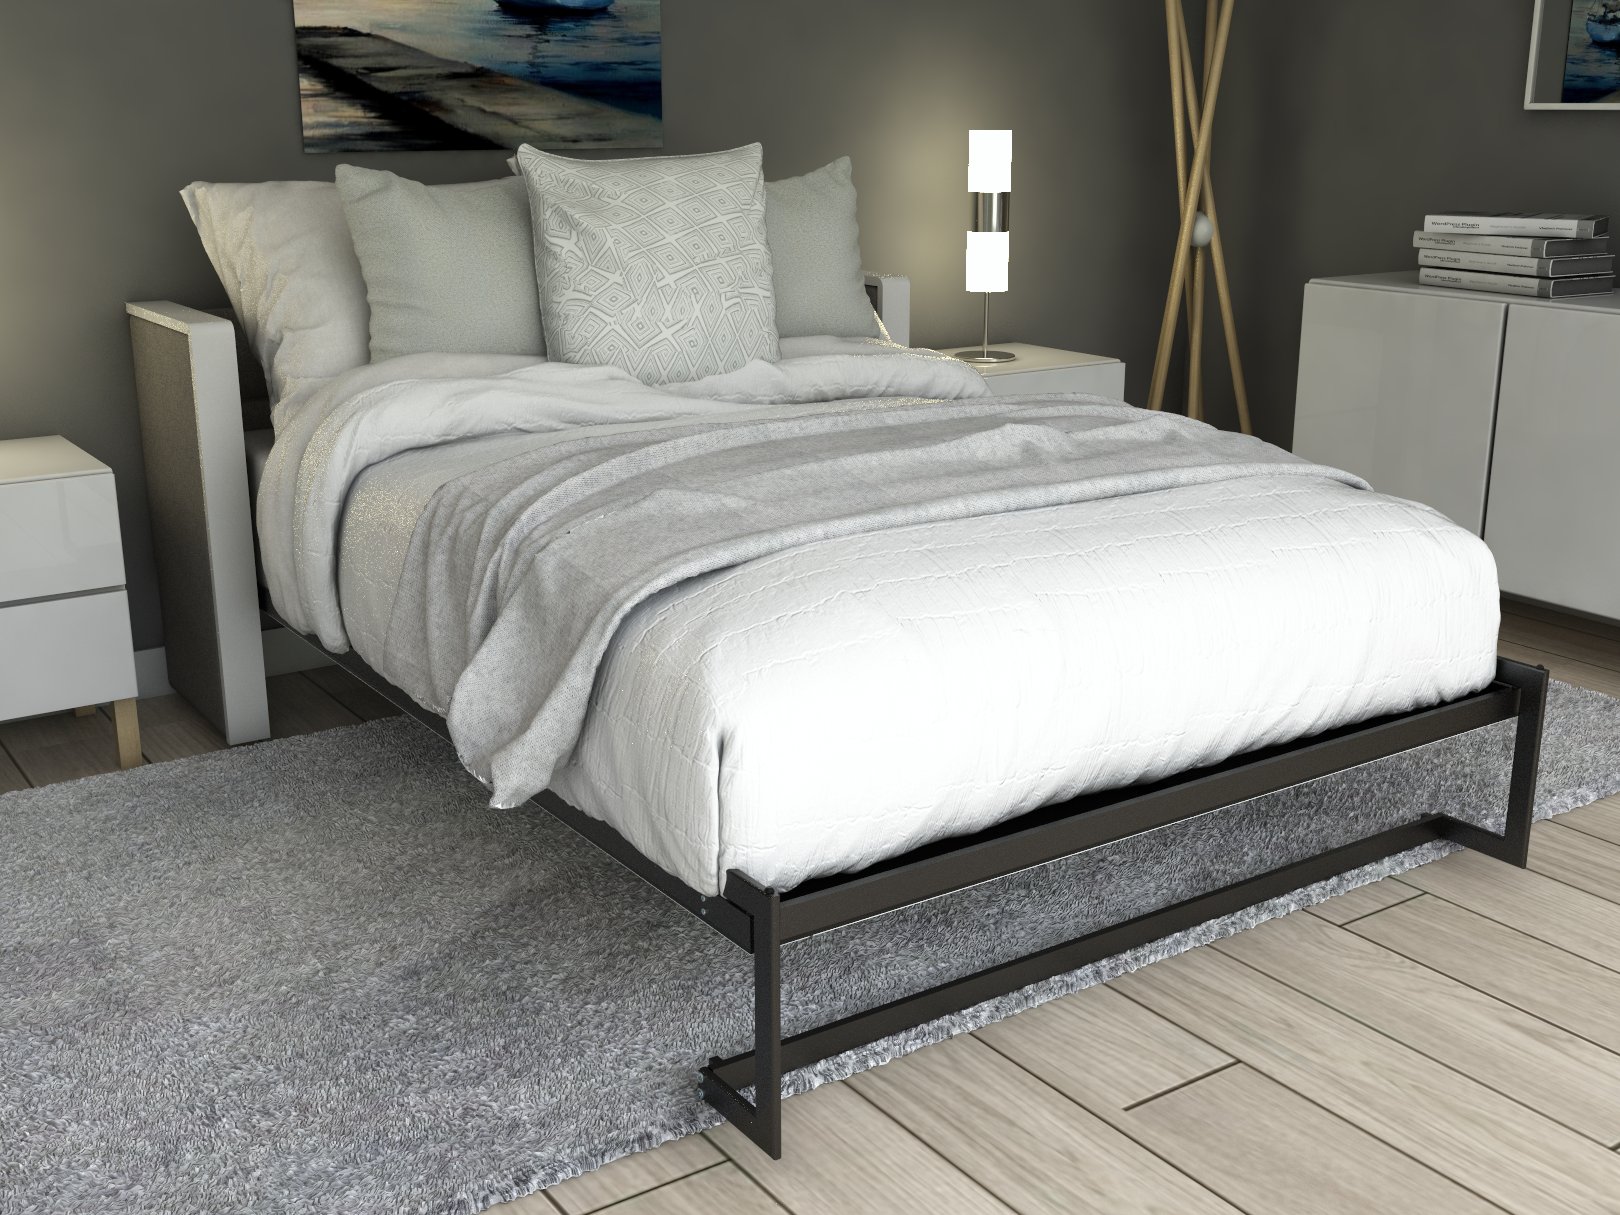 Esentelle base de cama queen size con laminado de madera color tzalam // MS